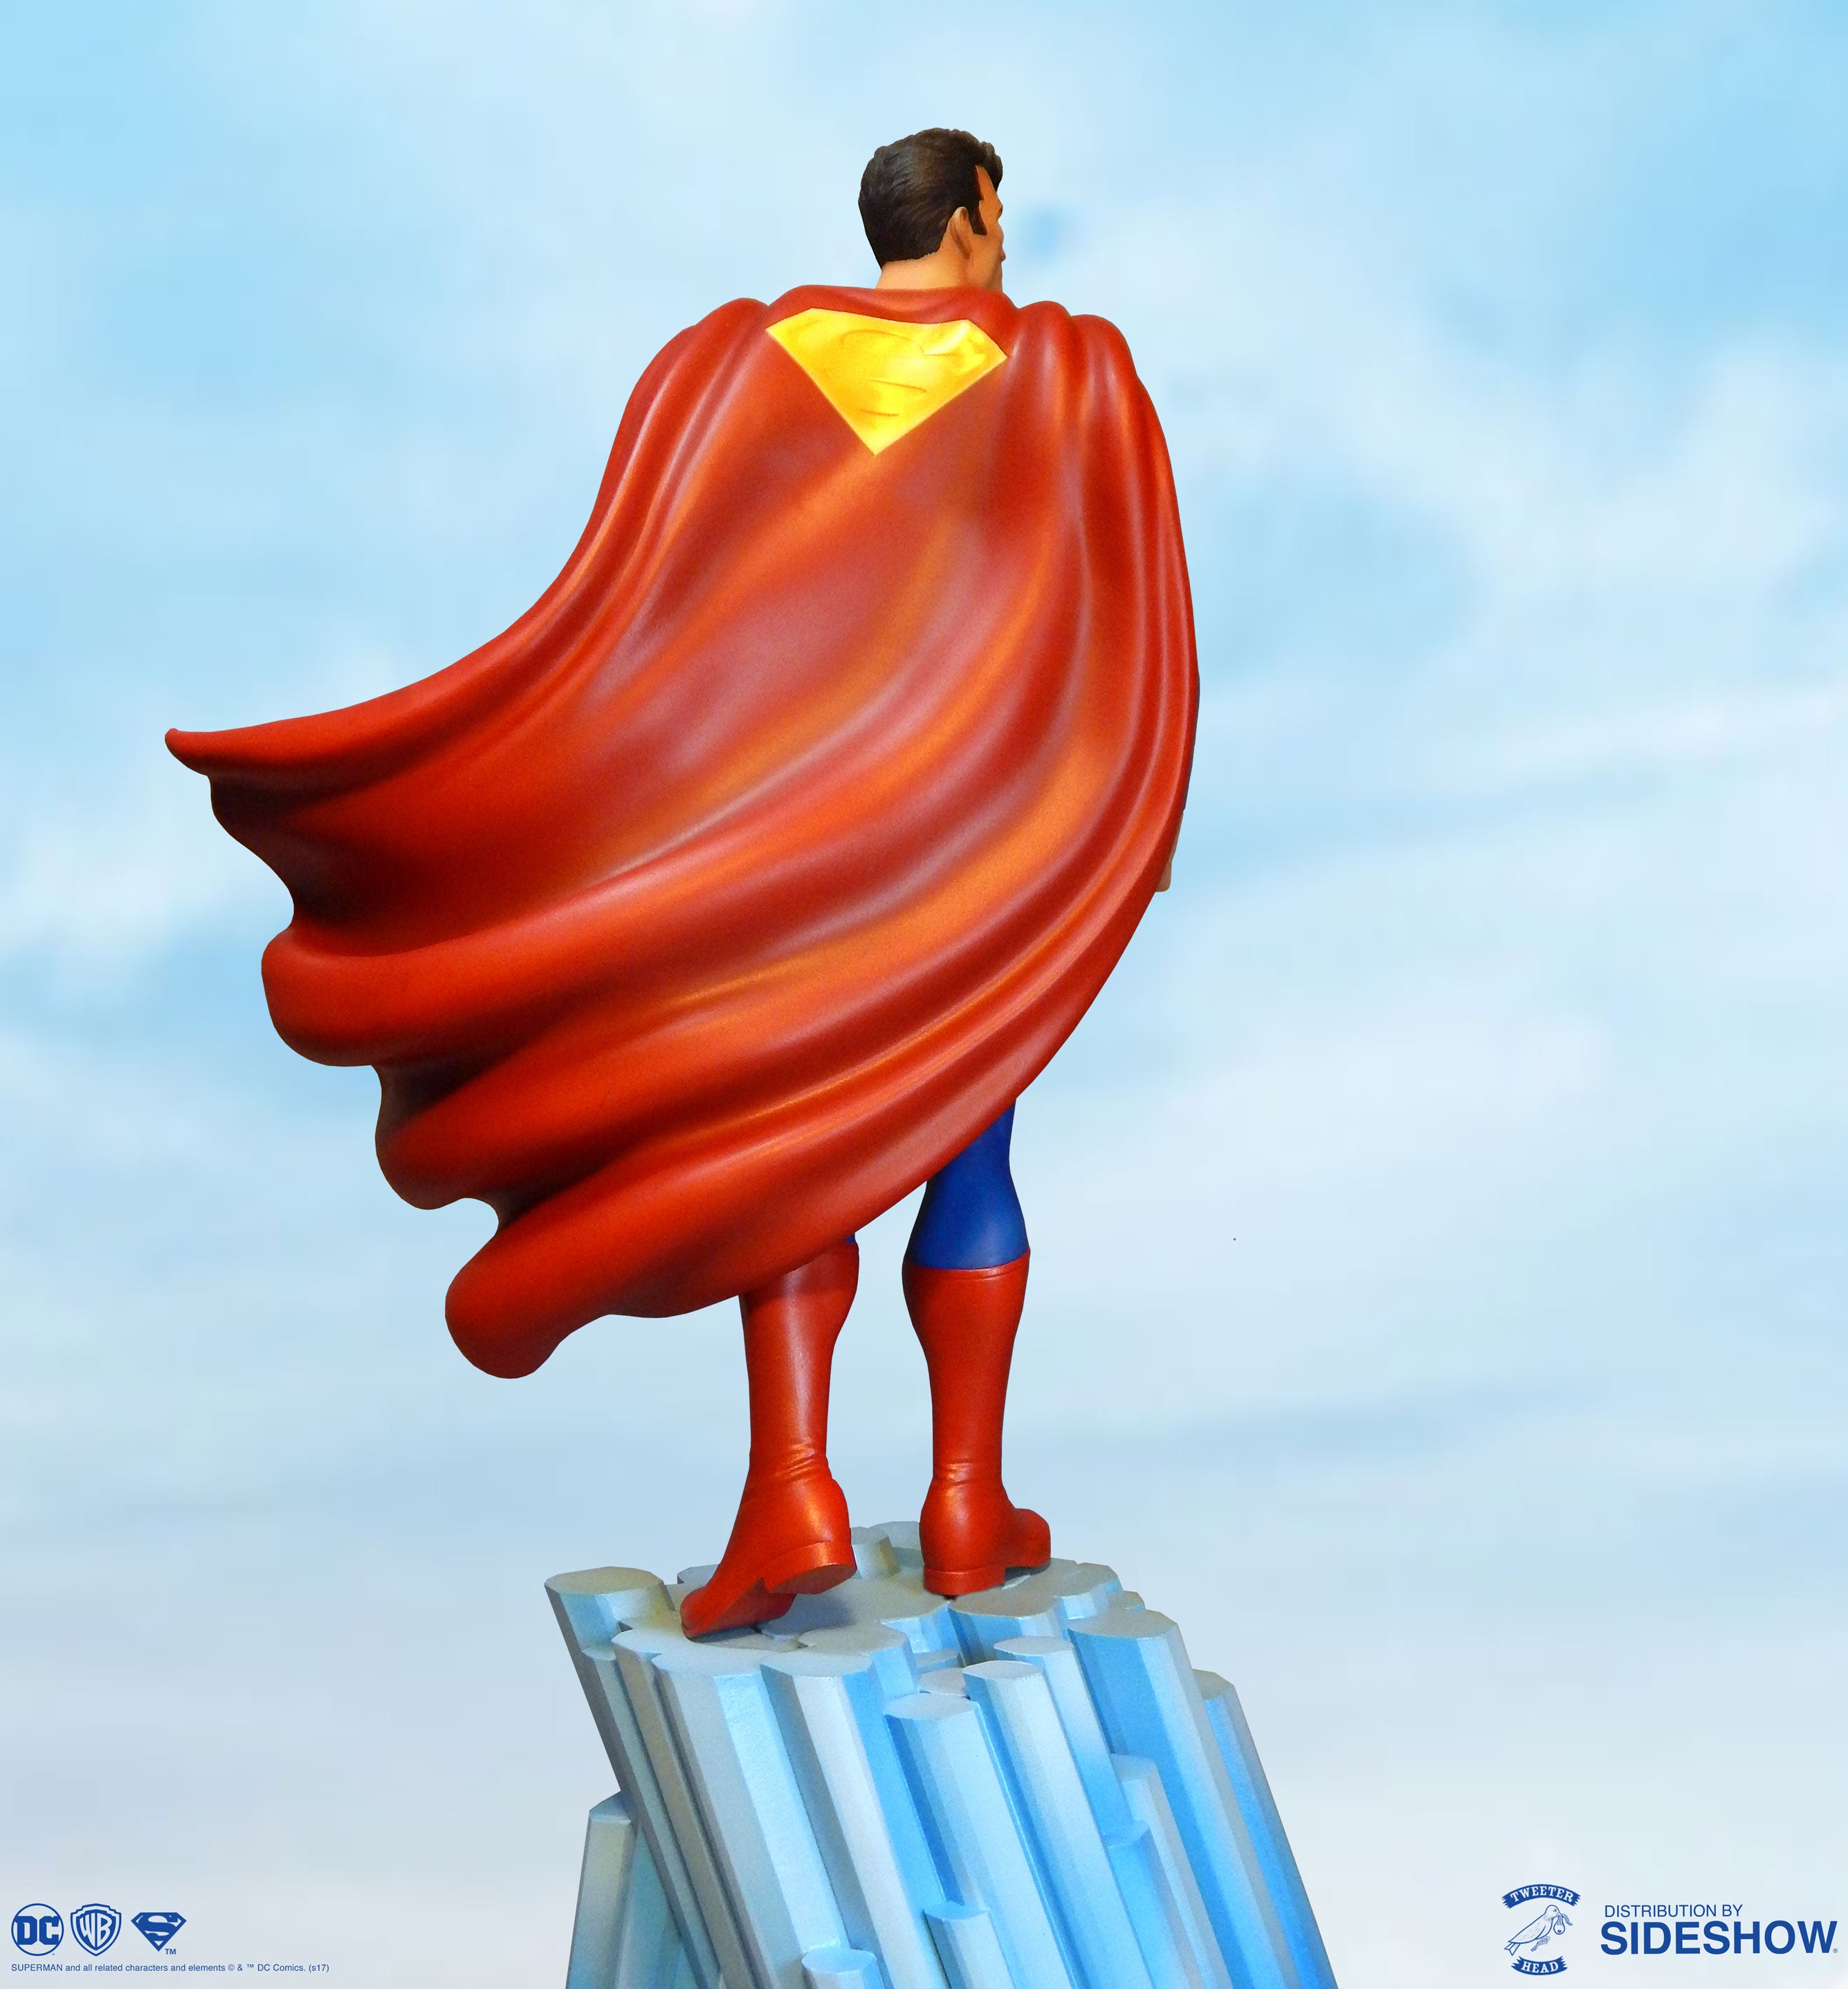 Sideshow Collectibles - DC Comics - Super Powers Superman Maquette by Tweeterhead - Marvelous Toys